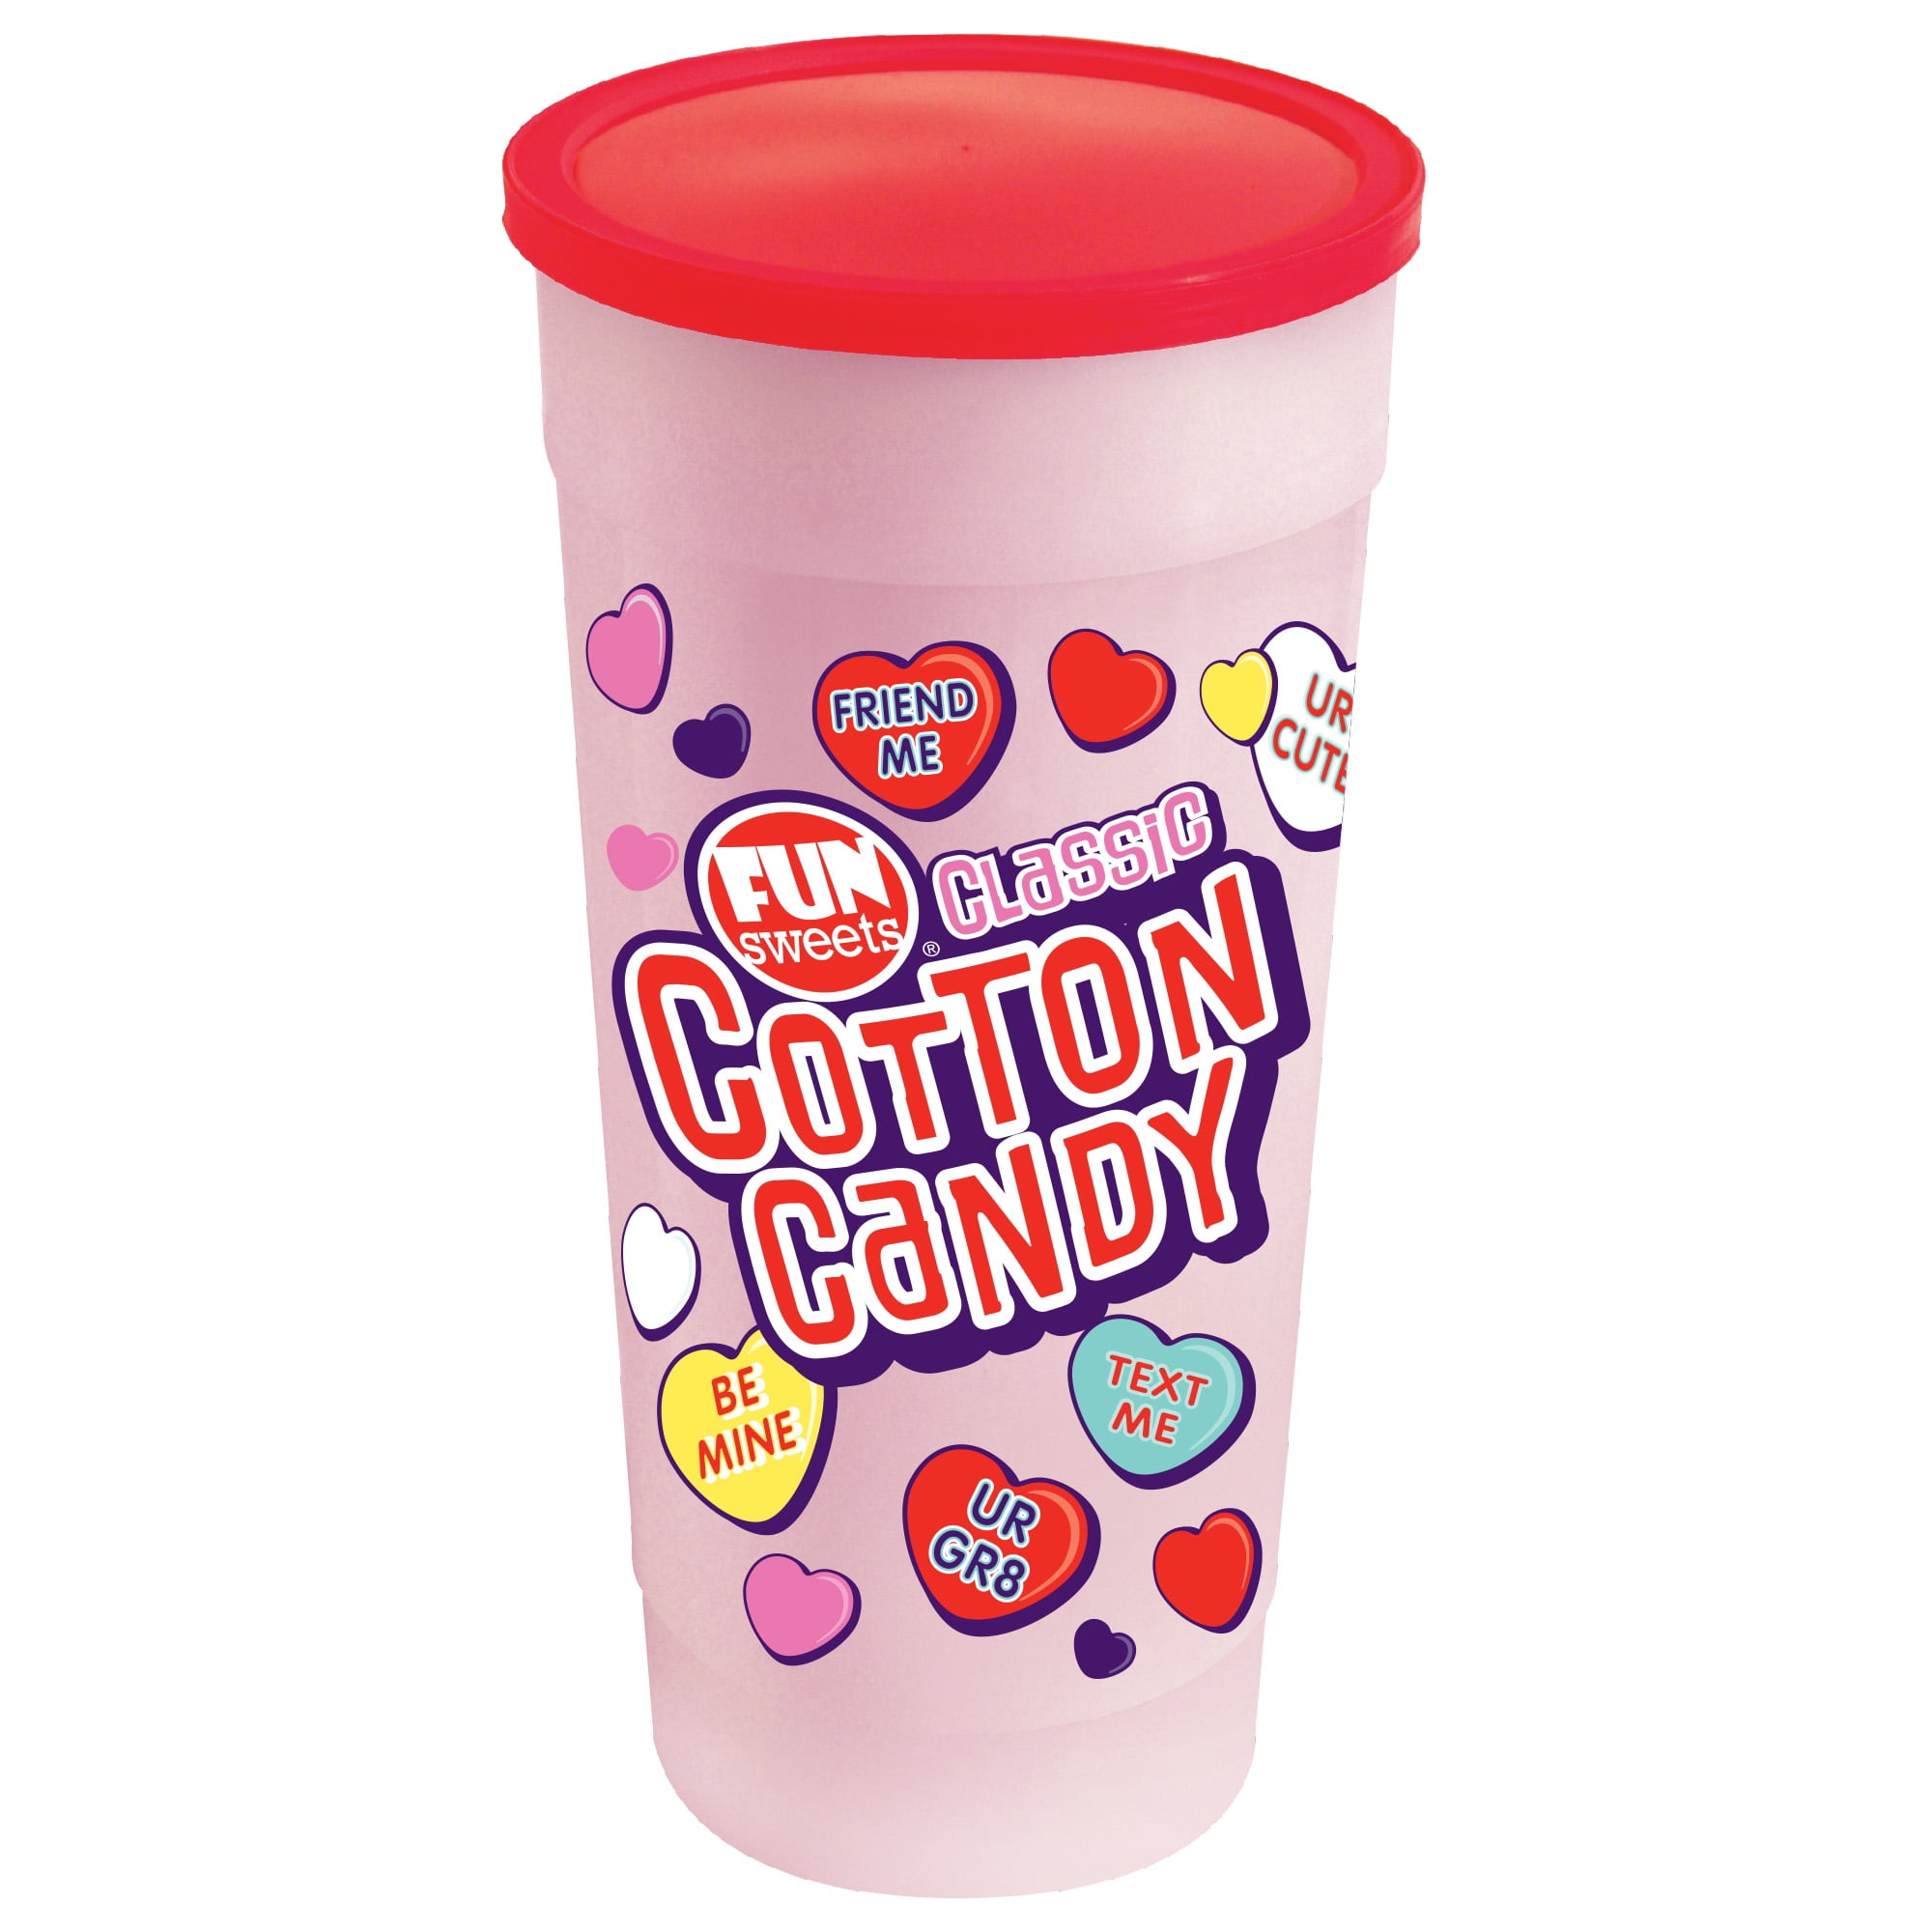 Fun Sweets Cherry Berry Vanilla Cotton Candy 4 Oz